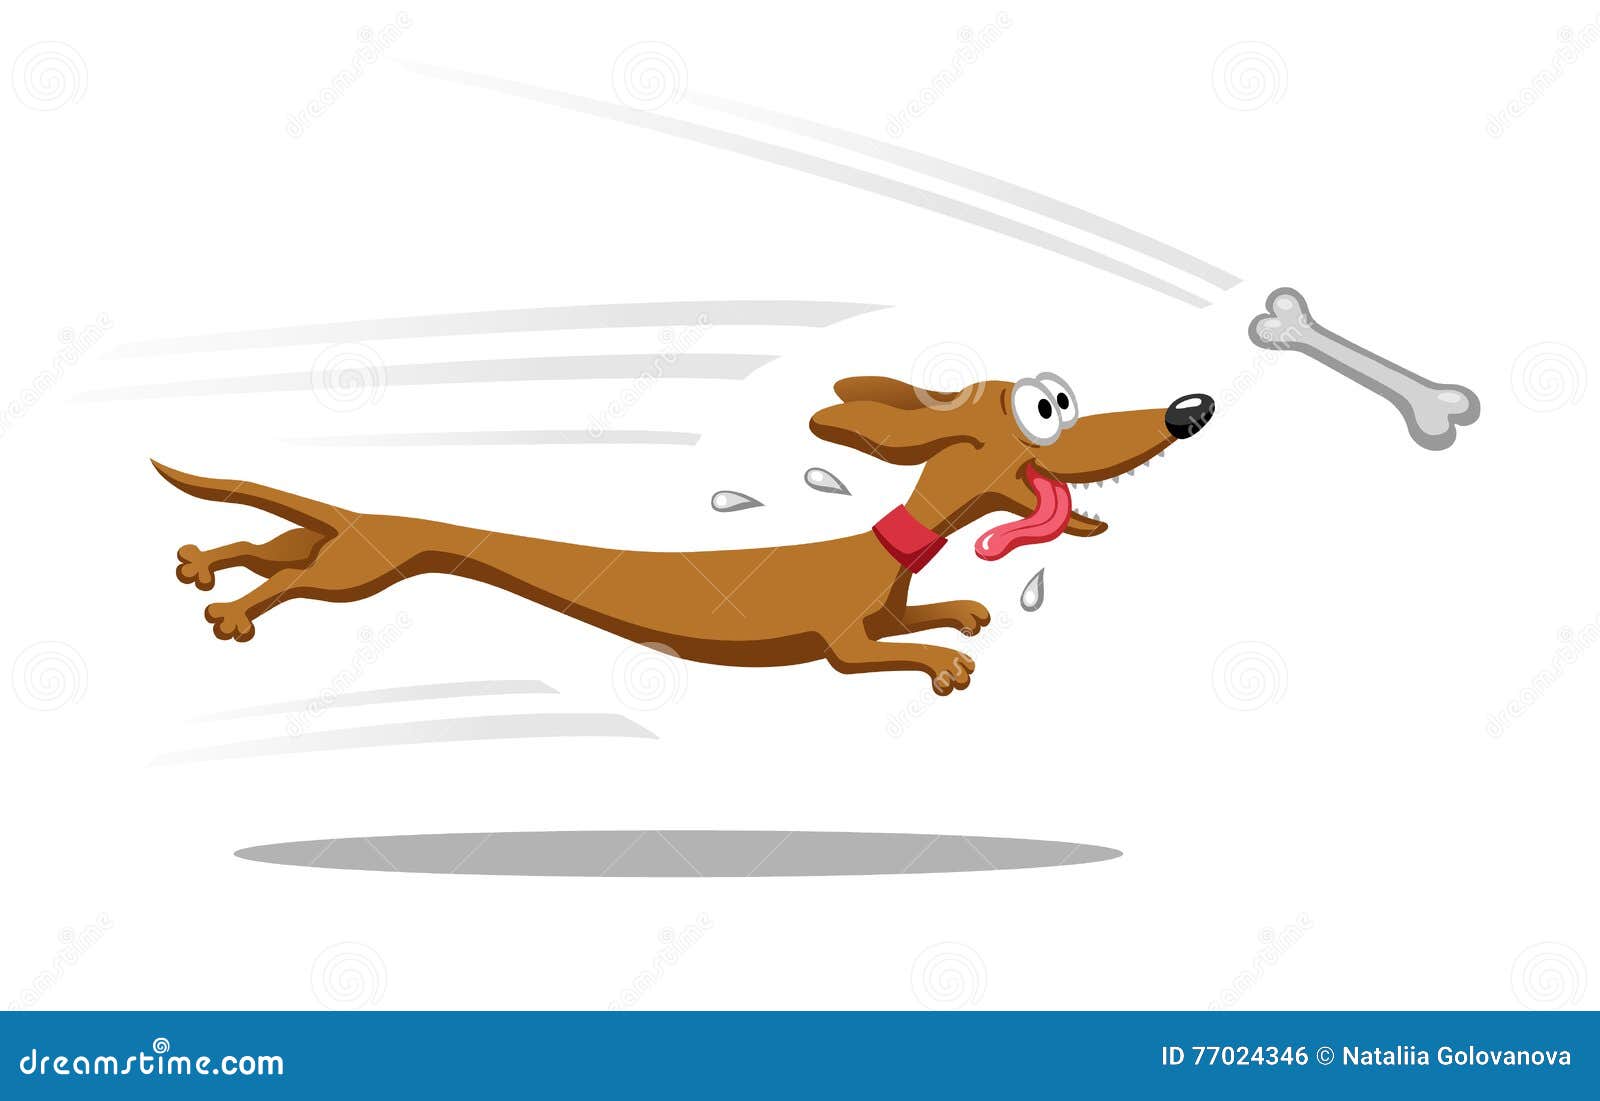 Running Dachshund Dog Cartoon Illustration Vector ...